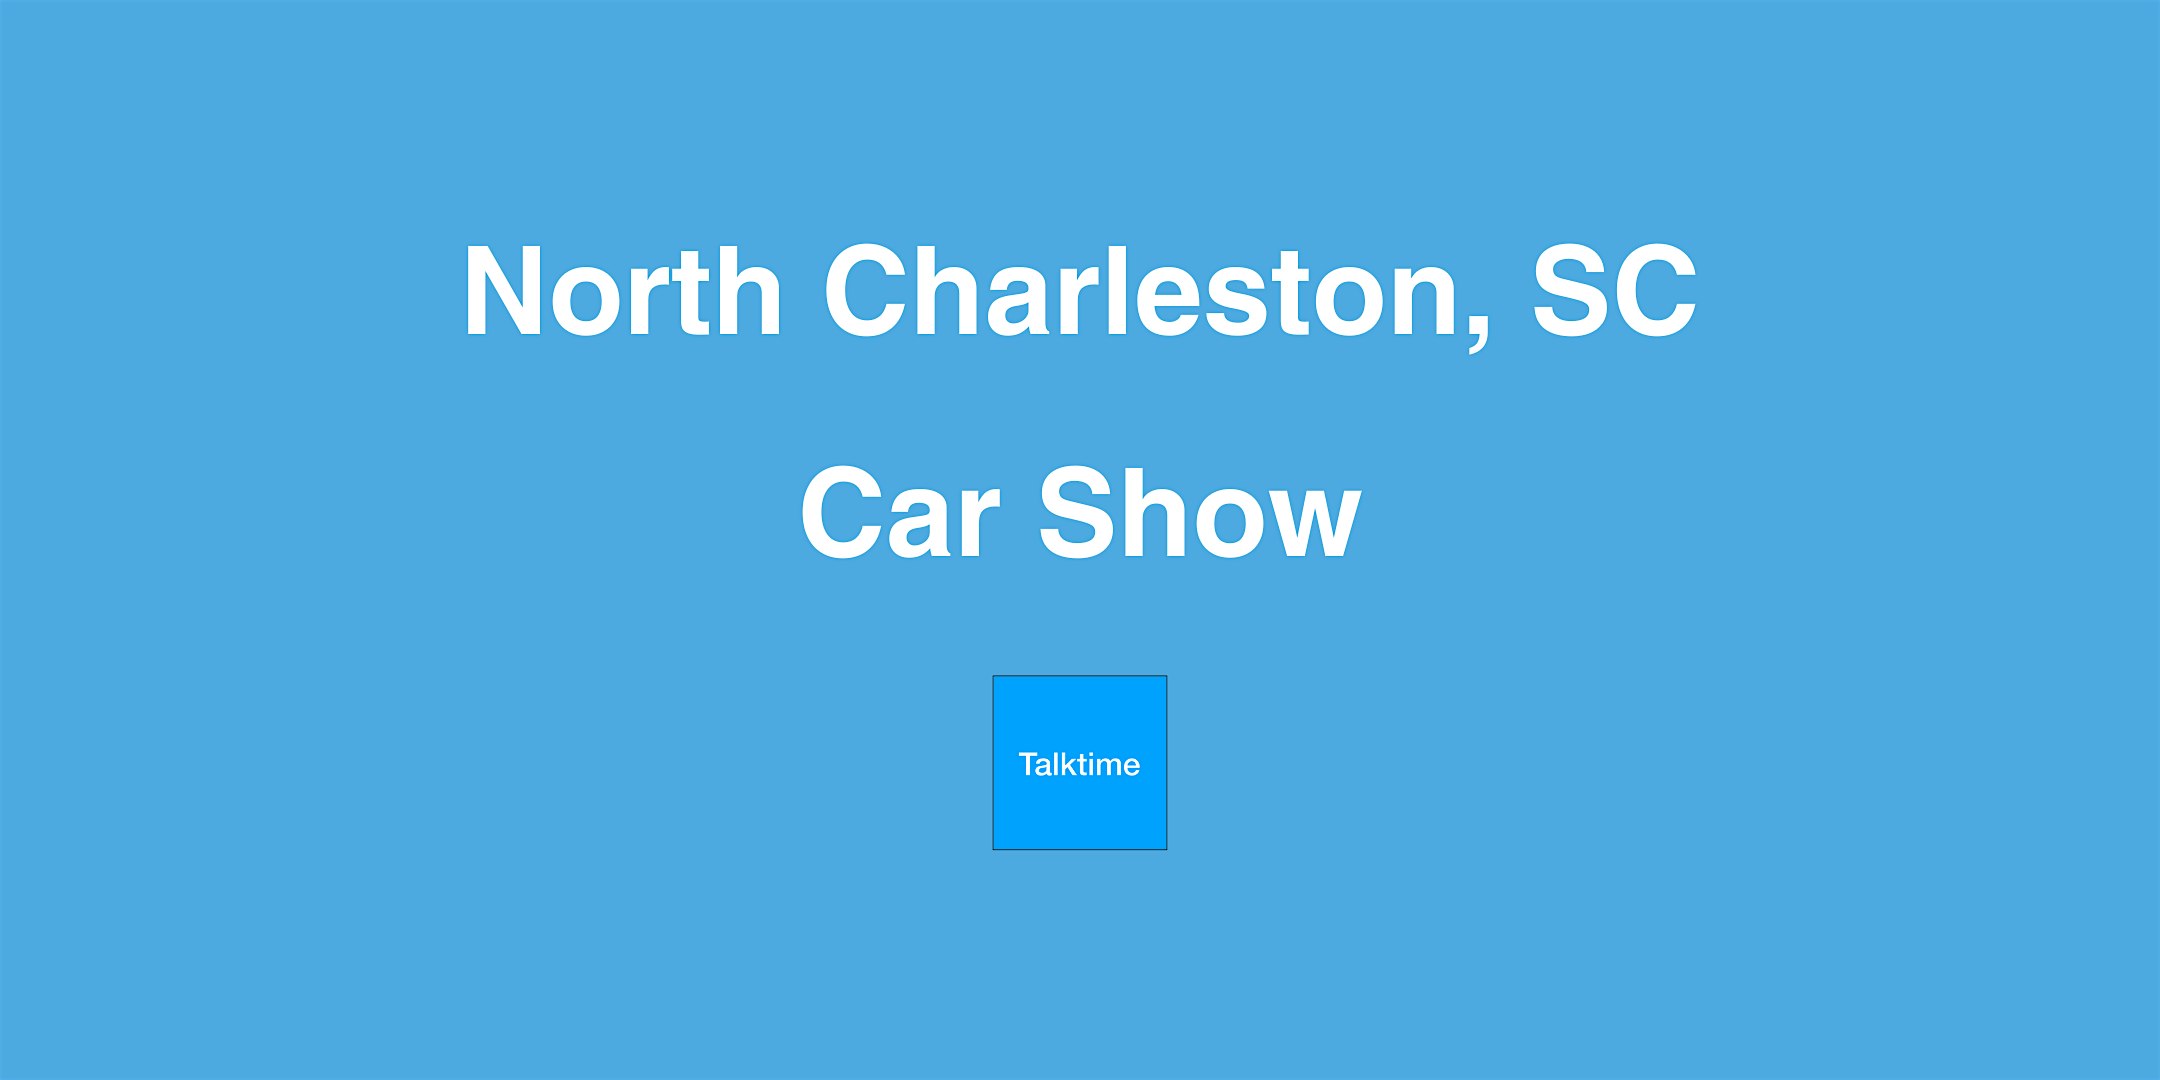 Car Show - North Charleston